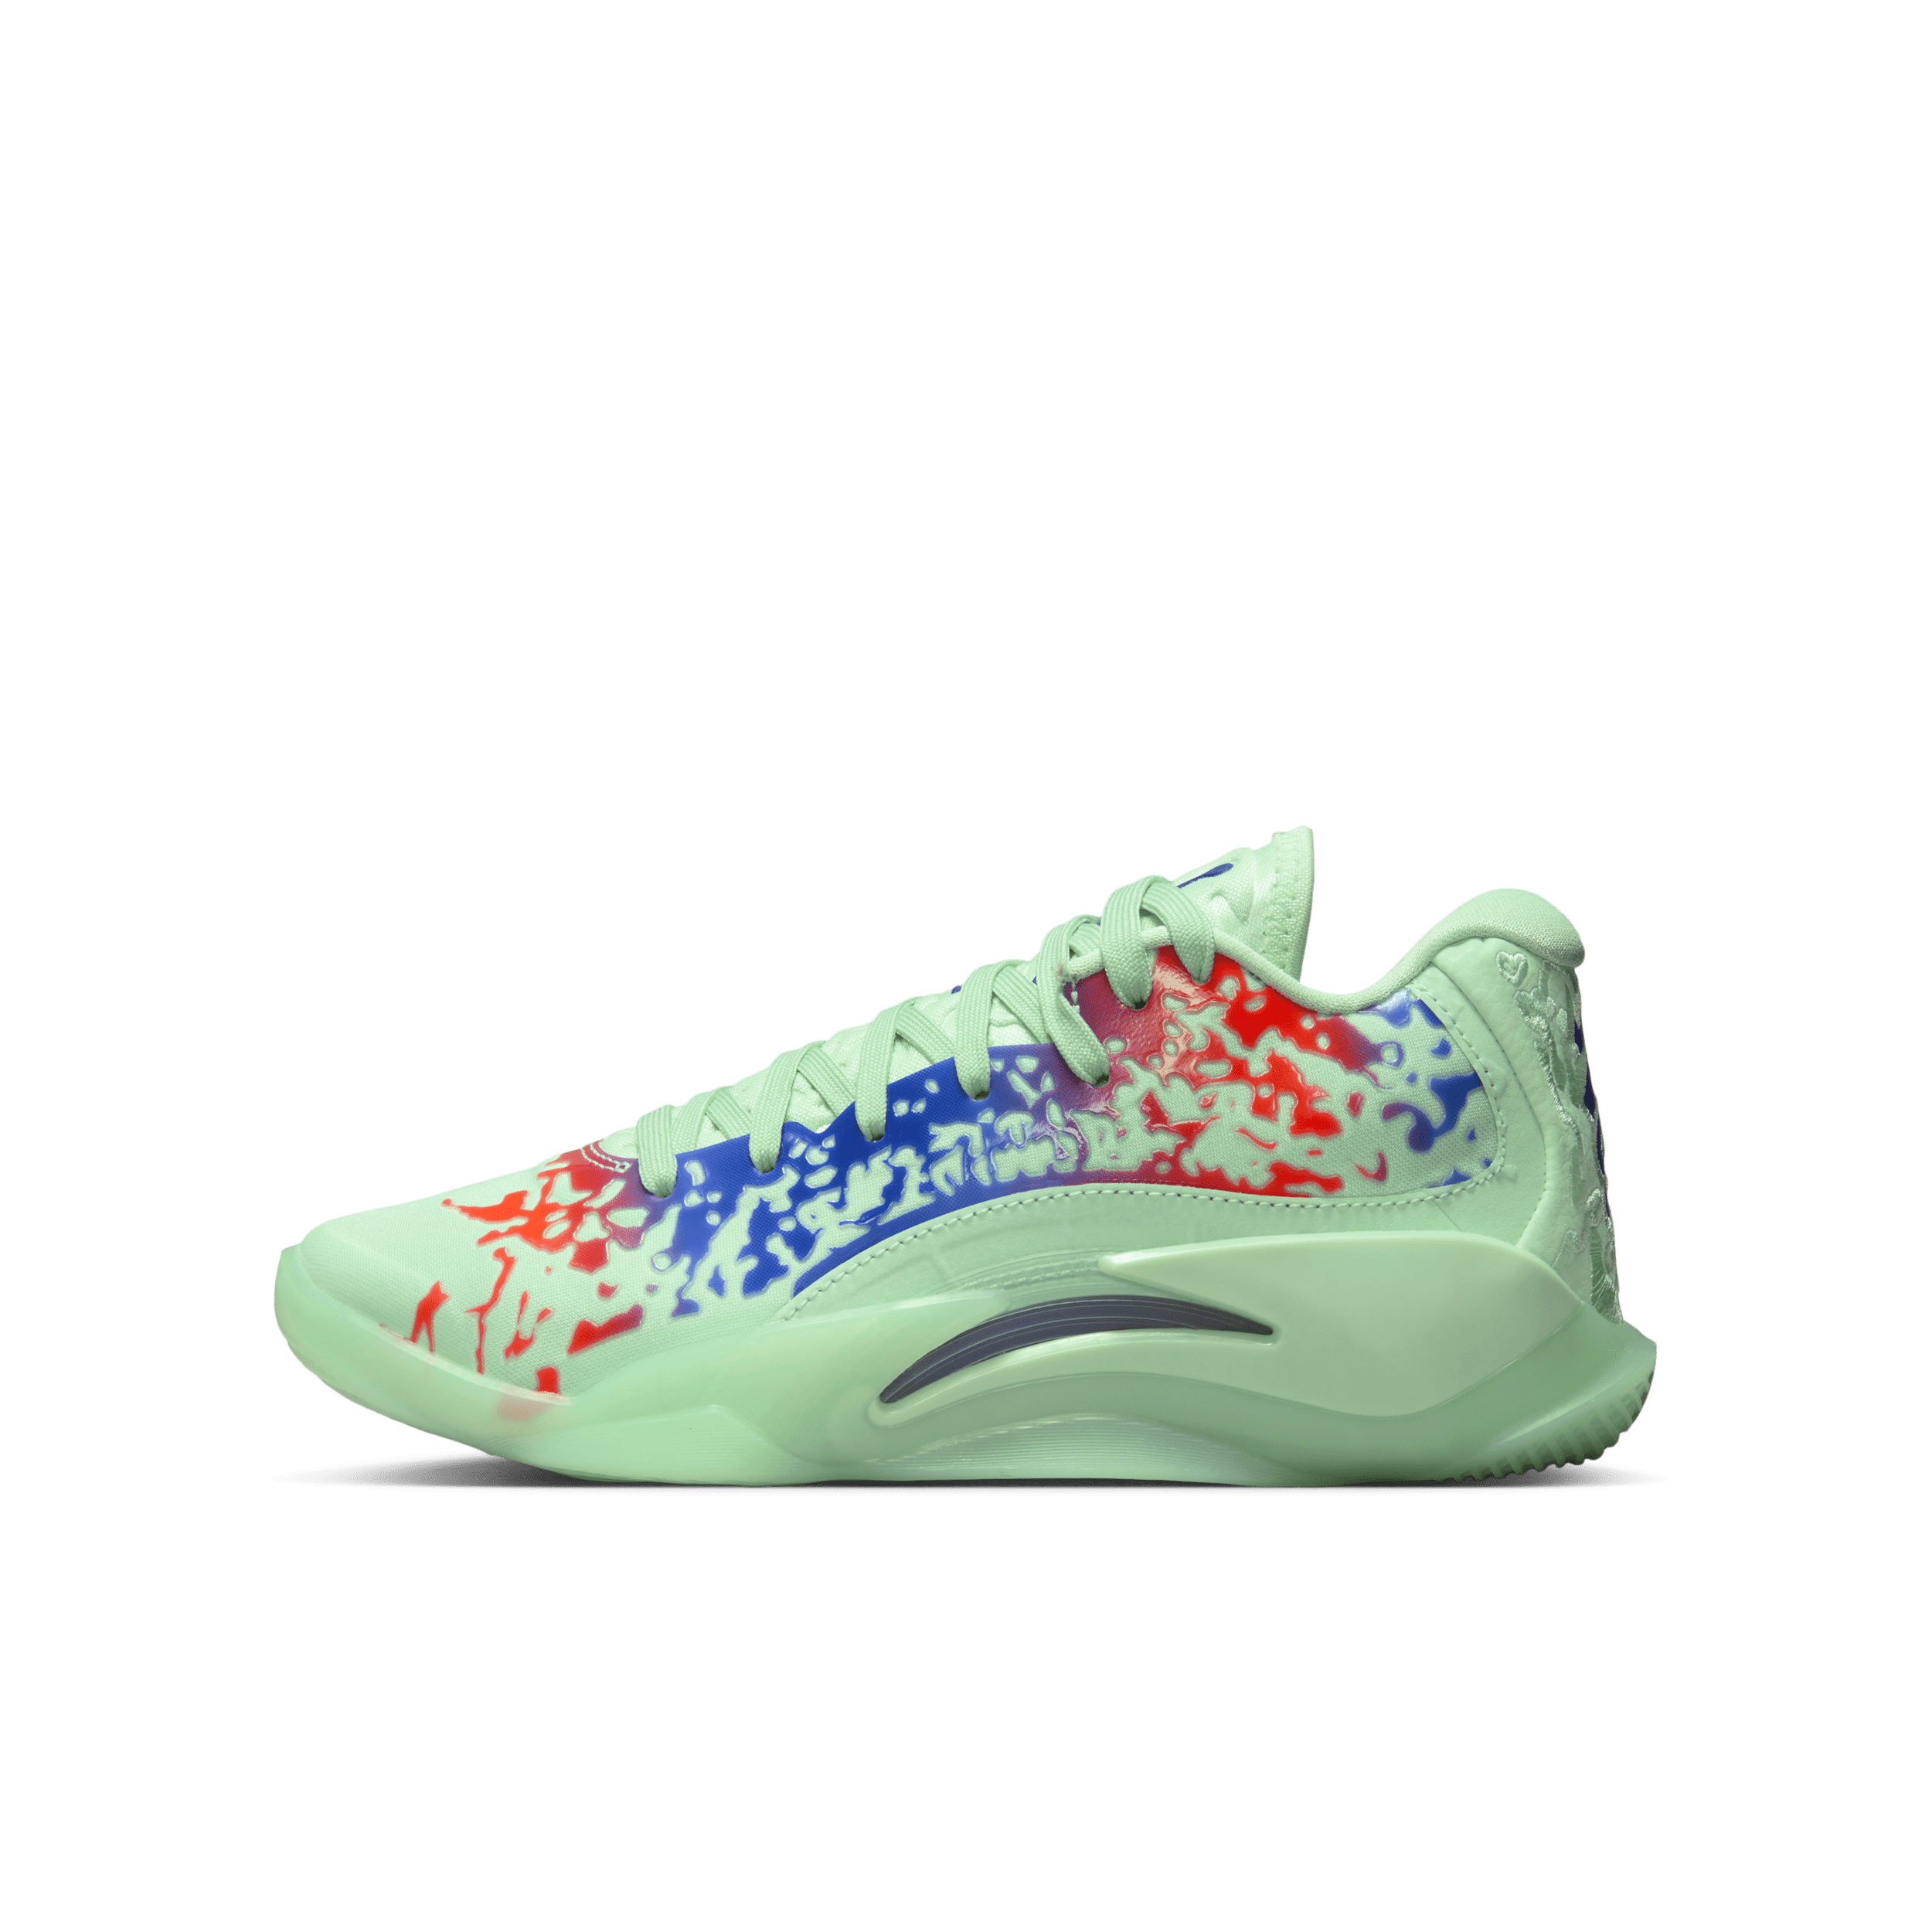 Nike Zion 3 'Mud, Sweat, and Tears' basketbalschoenen voor kids - Groen